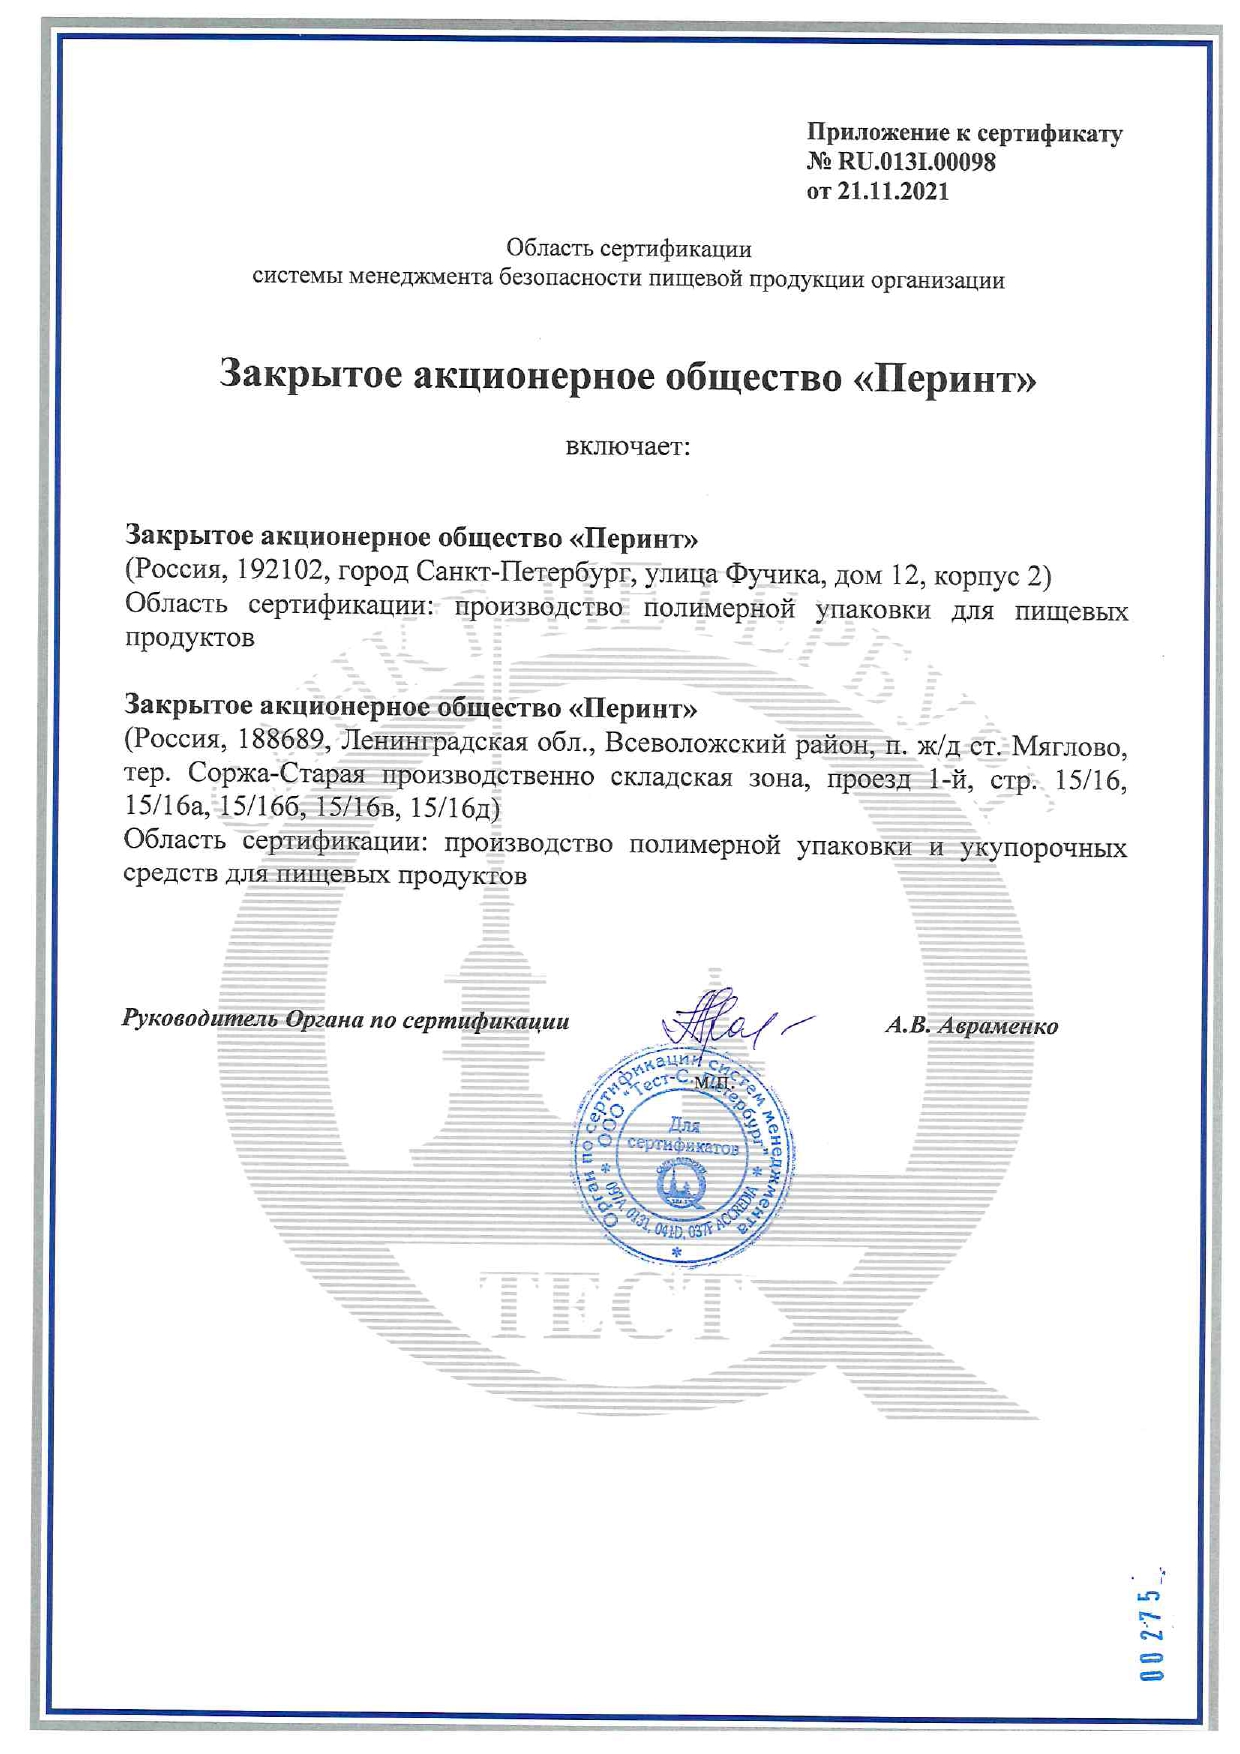 Сертификат соответствия СМ БПП требованиям ISO 220002018 ACCREDIA_page_2_2022